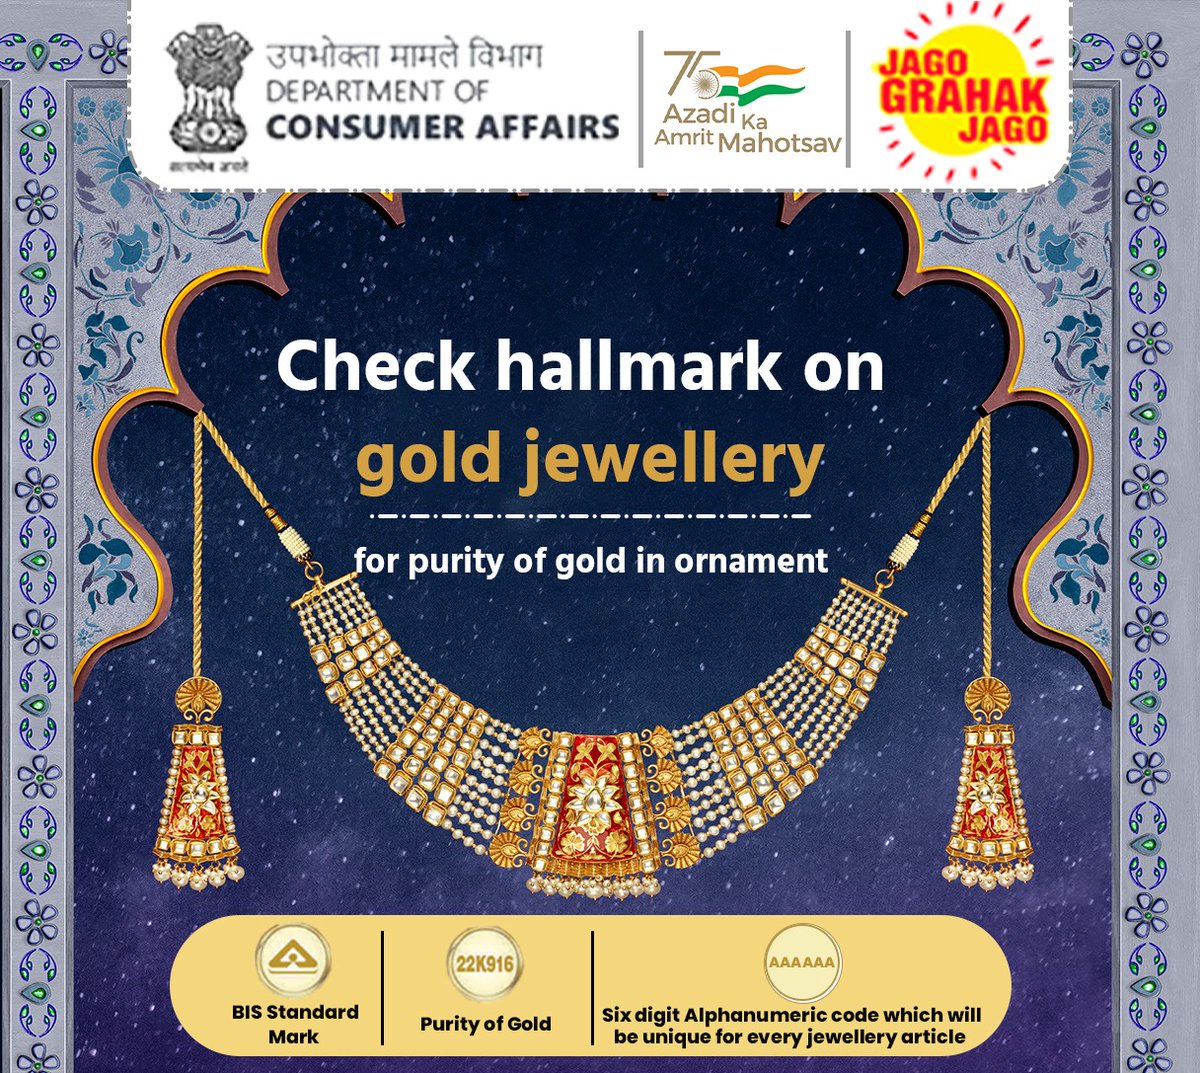 Check hallmark on gold jewellery for purity of gold in ornament. #JagoGrahakJago #Hallmark #Gold #Consumer #awareness #AzadiKaAmritMahotsav @PiyushGoyal @SadhviNiranjan @AshwiniKChoubey